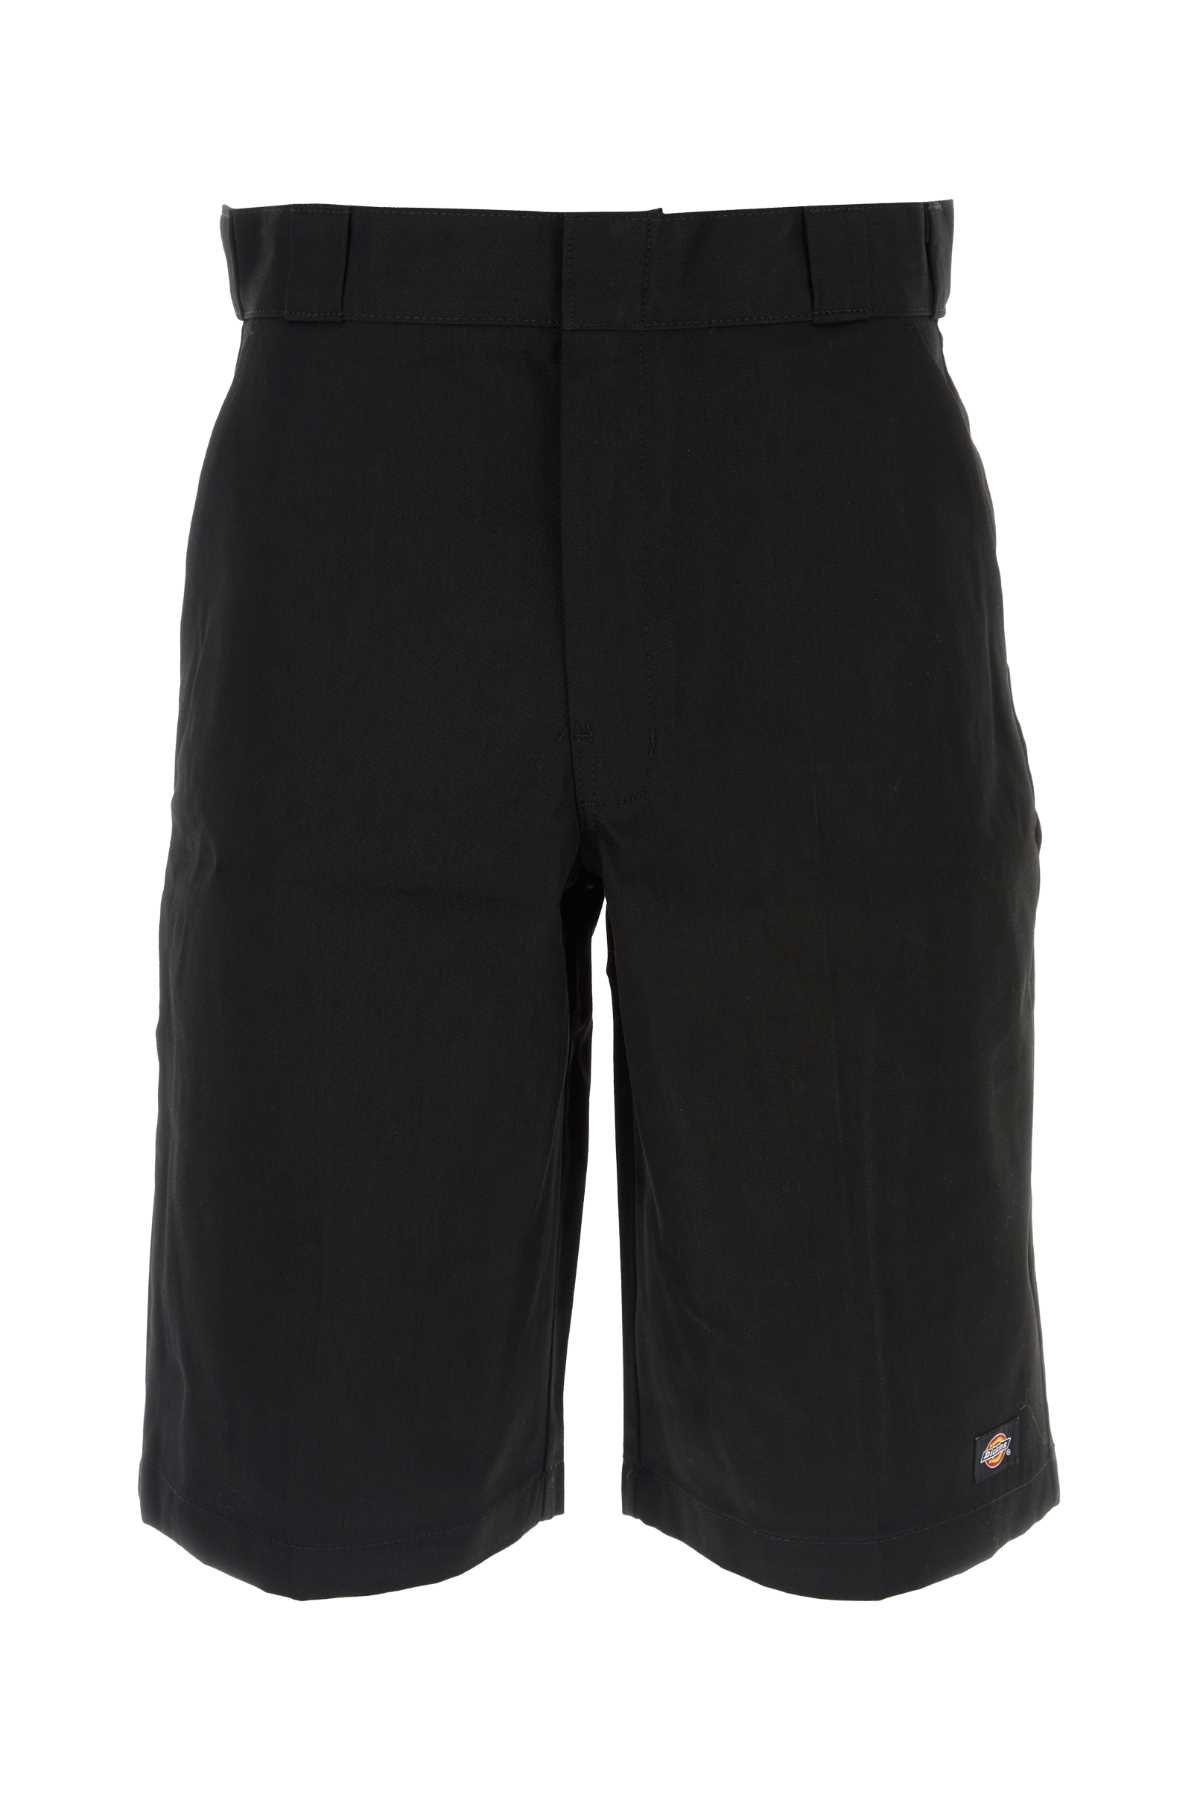 Black Polyester Blend Bermuda Shorts